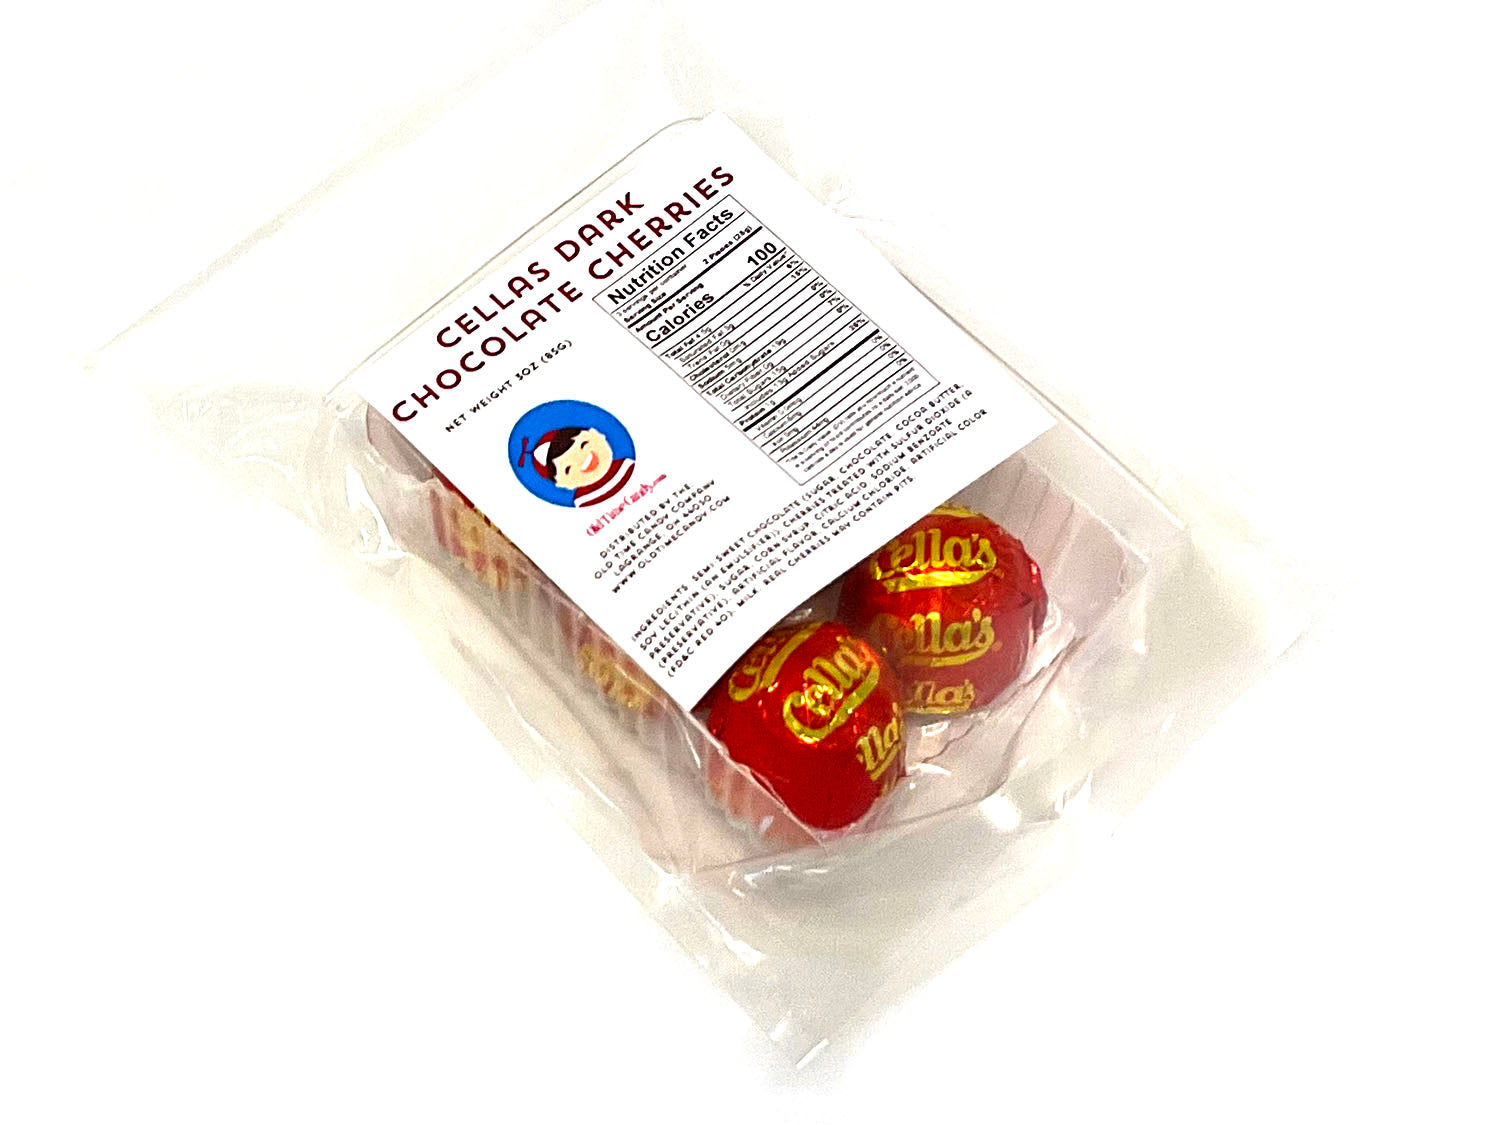 Cella's Dark Chocolate Covered Cherries - 3 oz bag